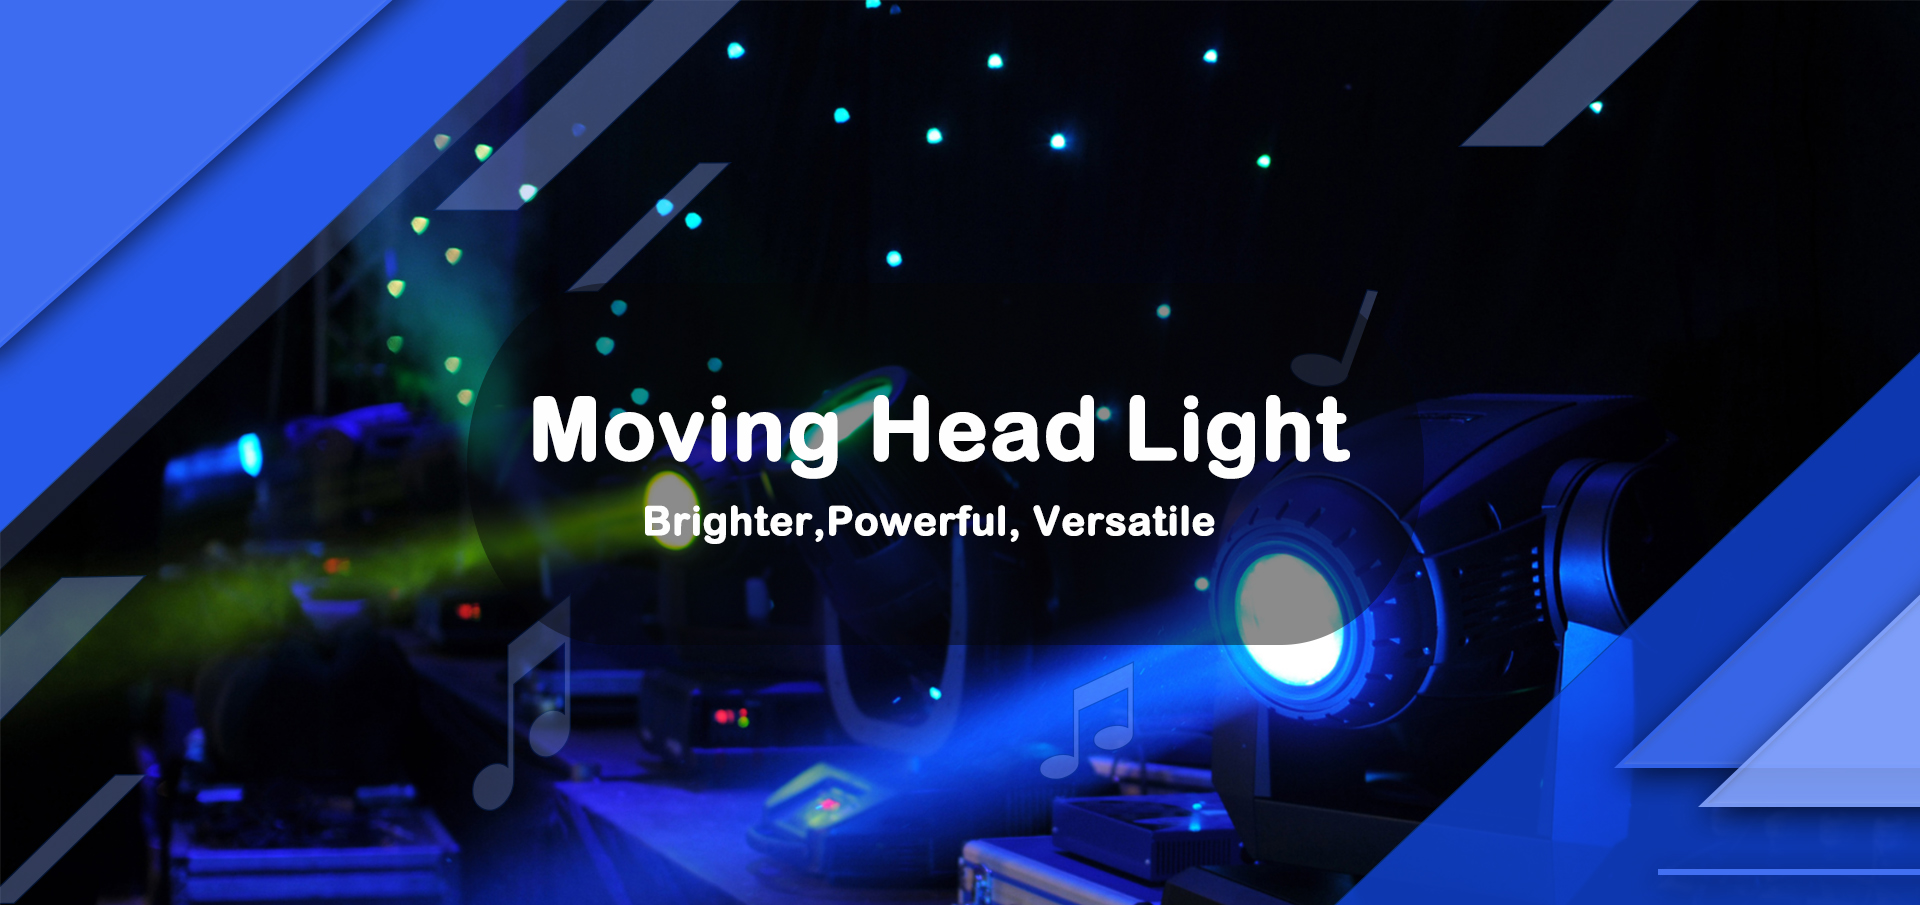 Moving Head Light